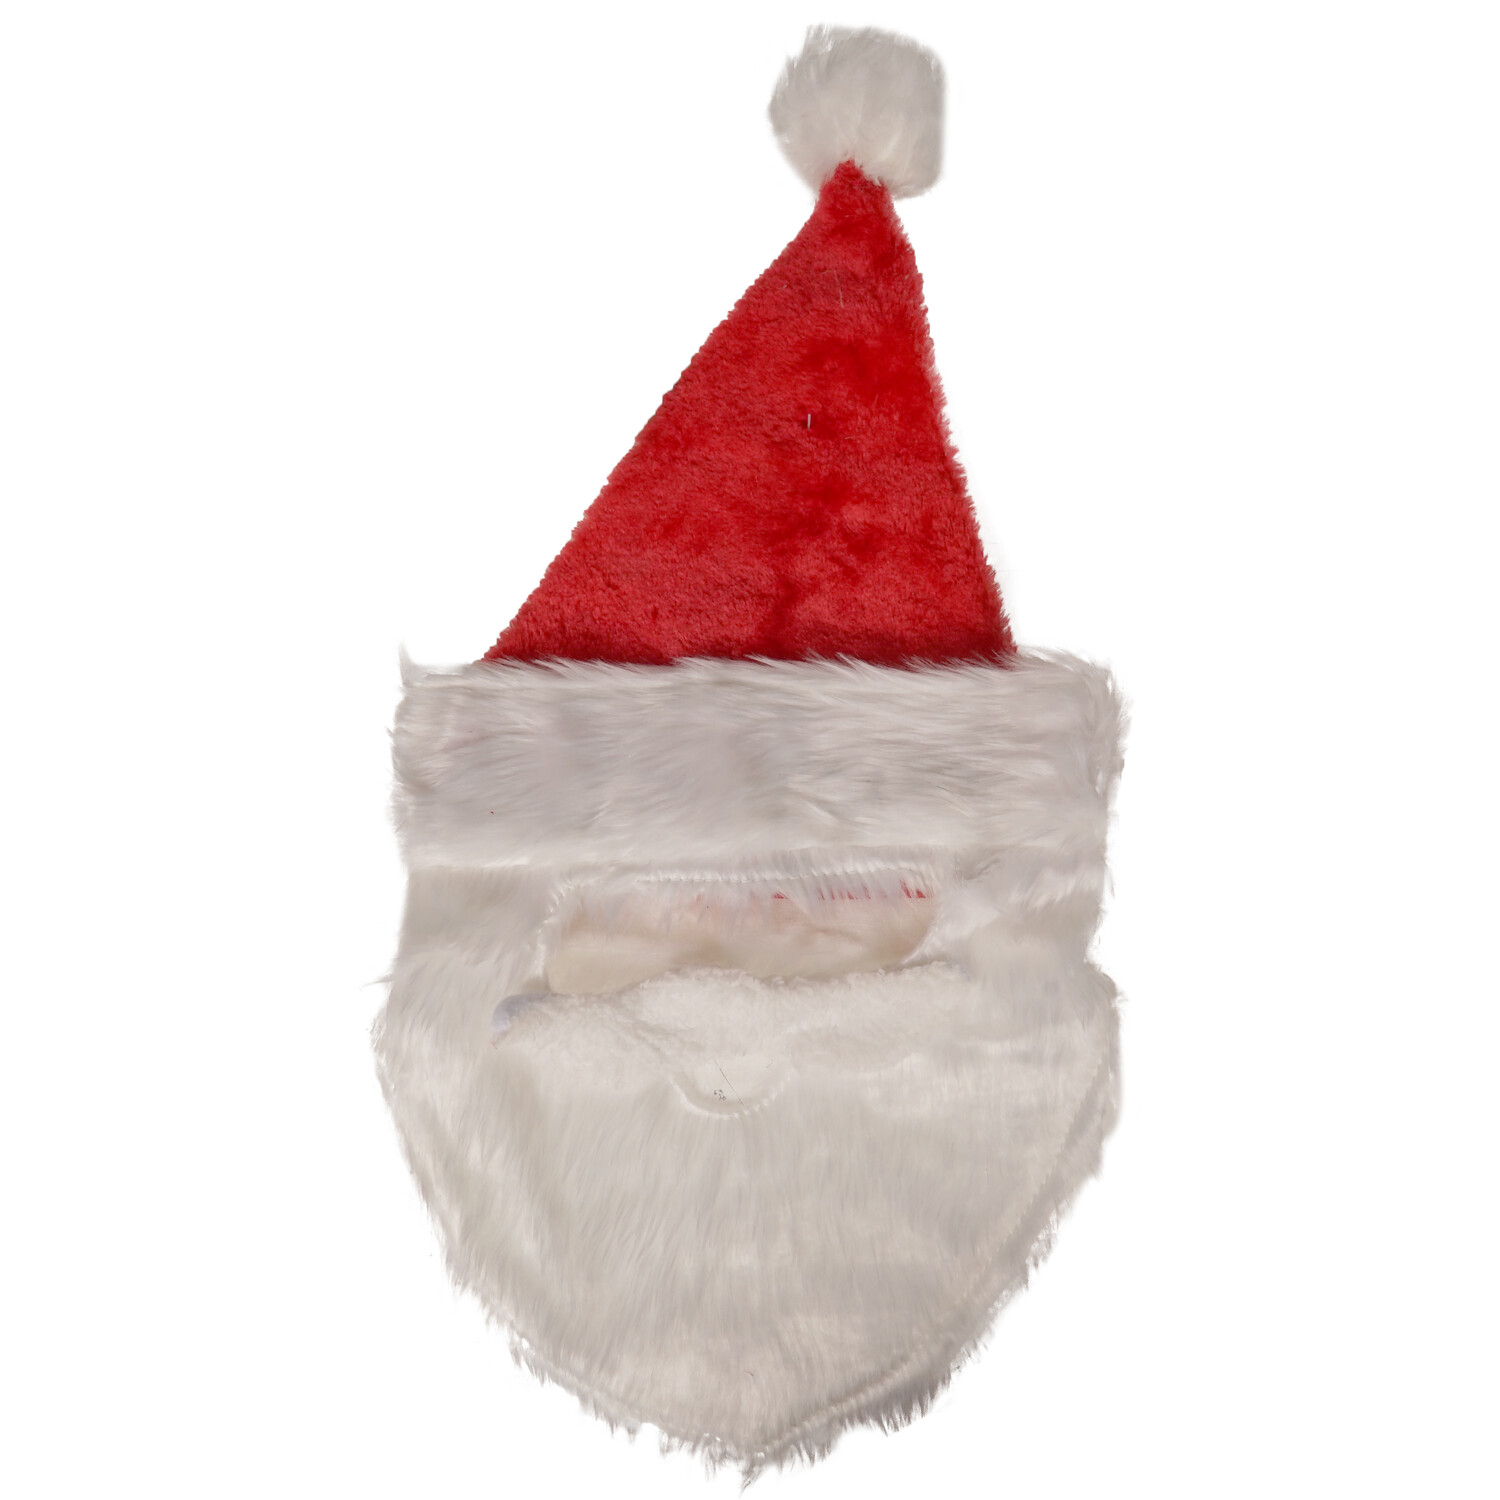 Felt Santa Hat With Beard Image